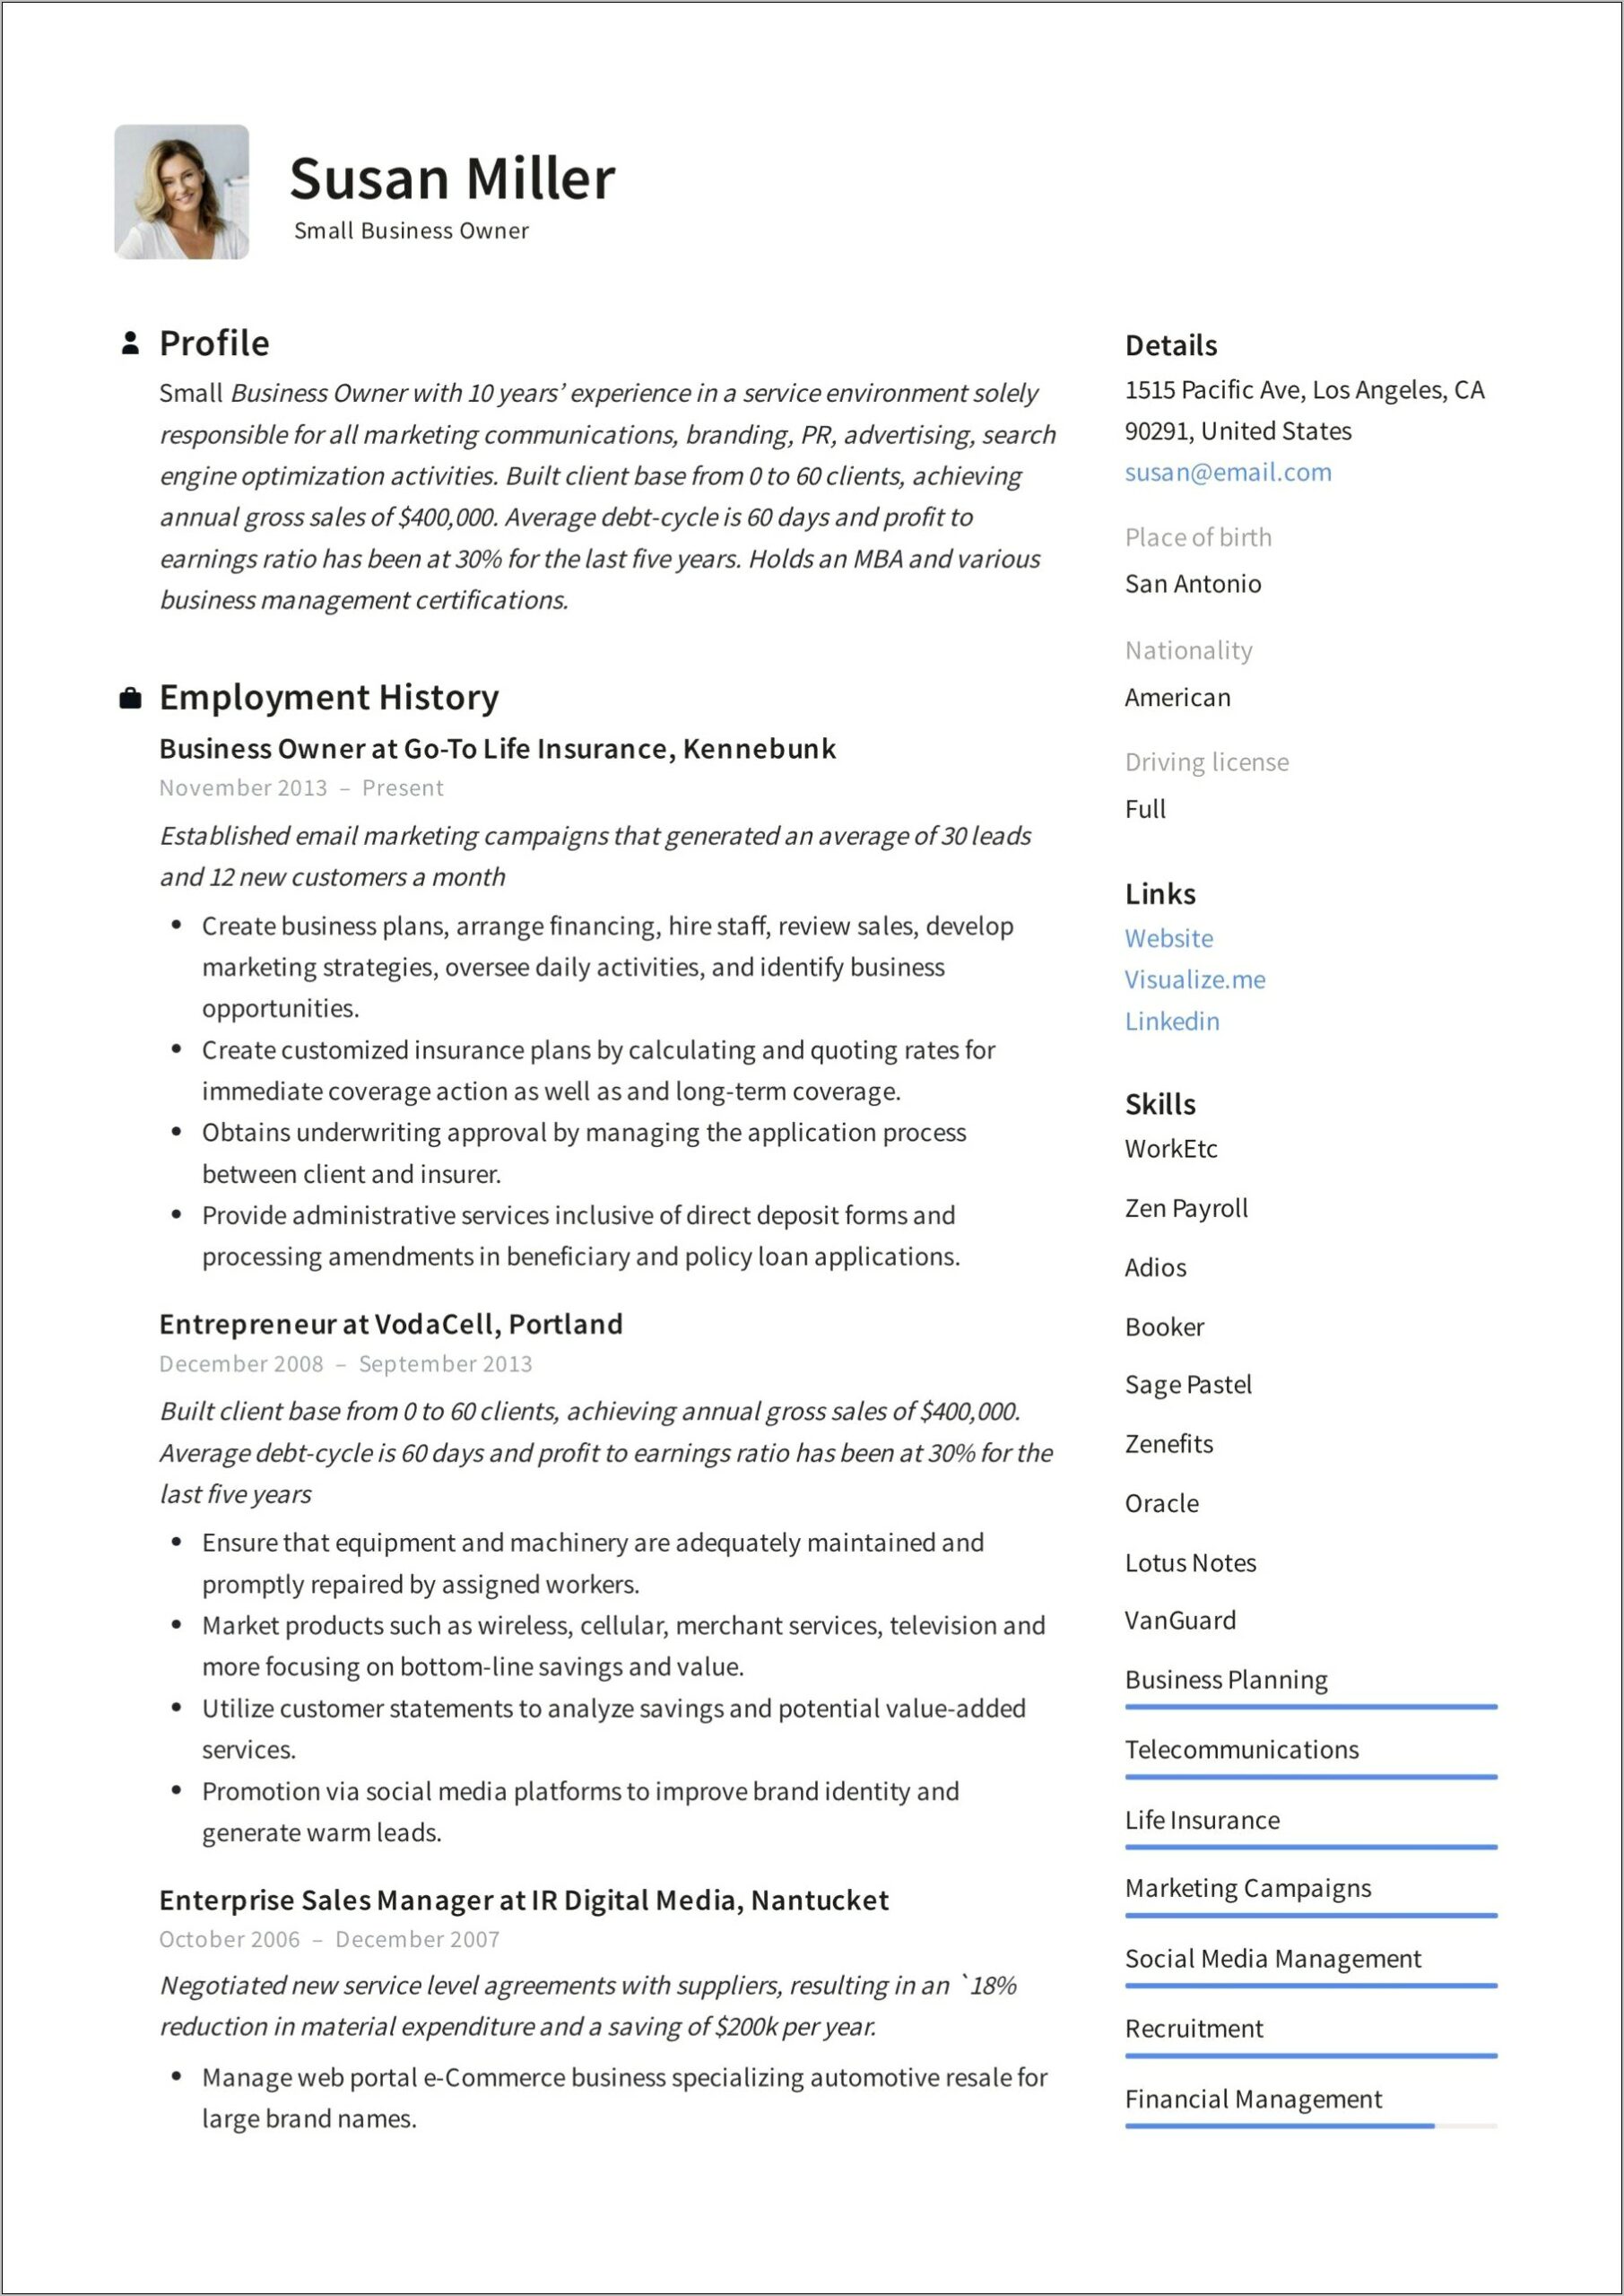 Ecommerce Marketing Manager Job Description For Resume